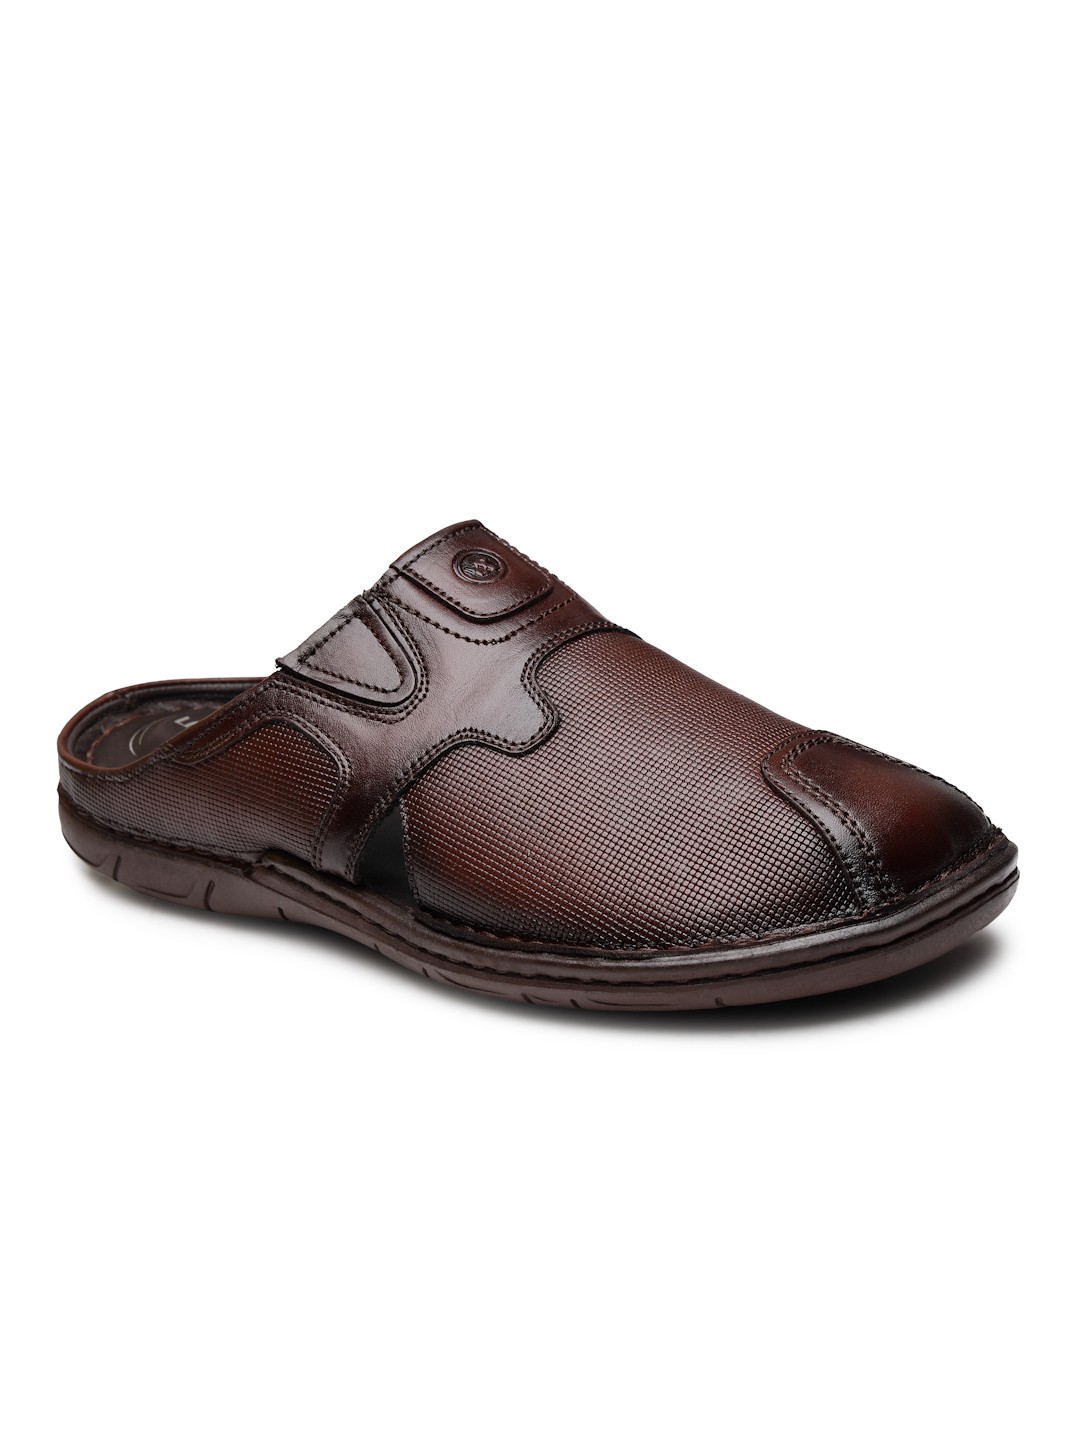 Buy Von Wellx Germany Comfort Men's Brown Slippers Arlo Online in Sri Lanka